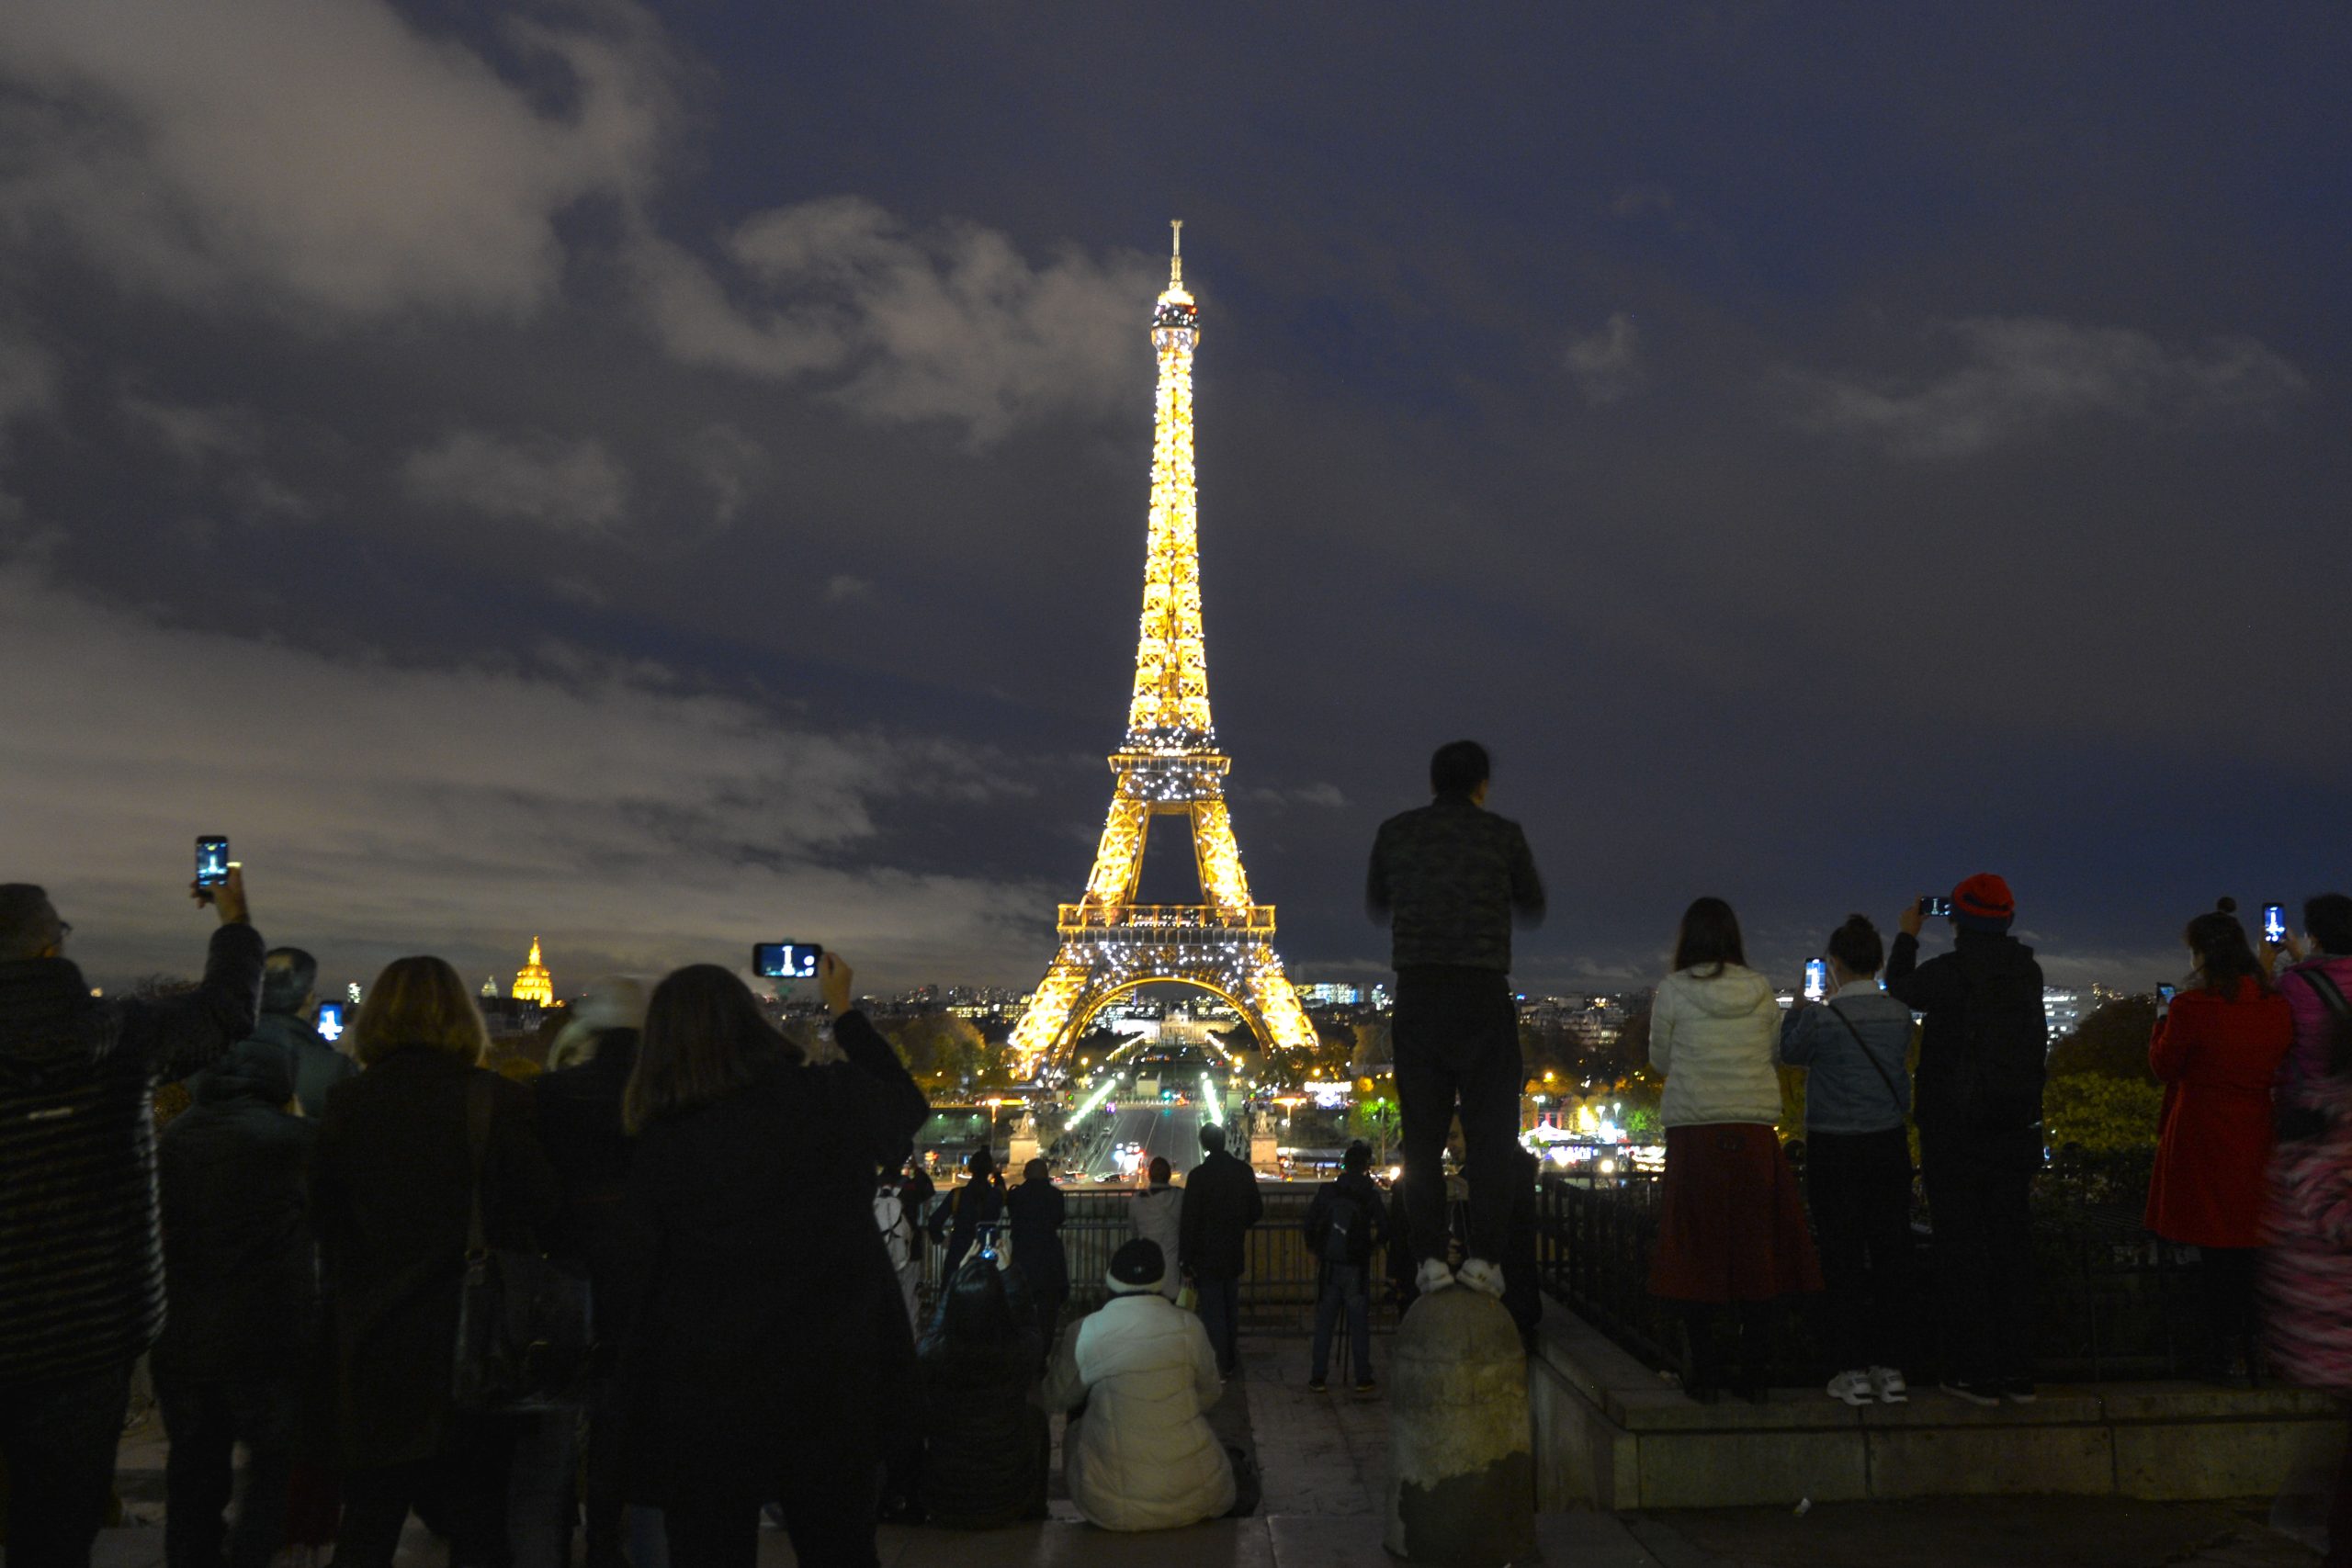 Photo: Crowds gather on Trocadero terrace to watch the Eiffel Tower sparkling illumination effects. On Tuesday, November 13, 2018, in Paris, France. Credit: Artur Widak/NurPhoto